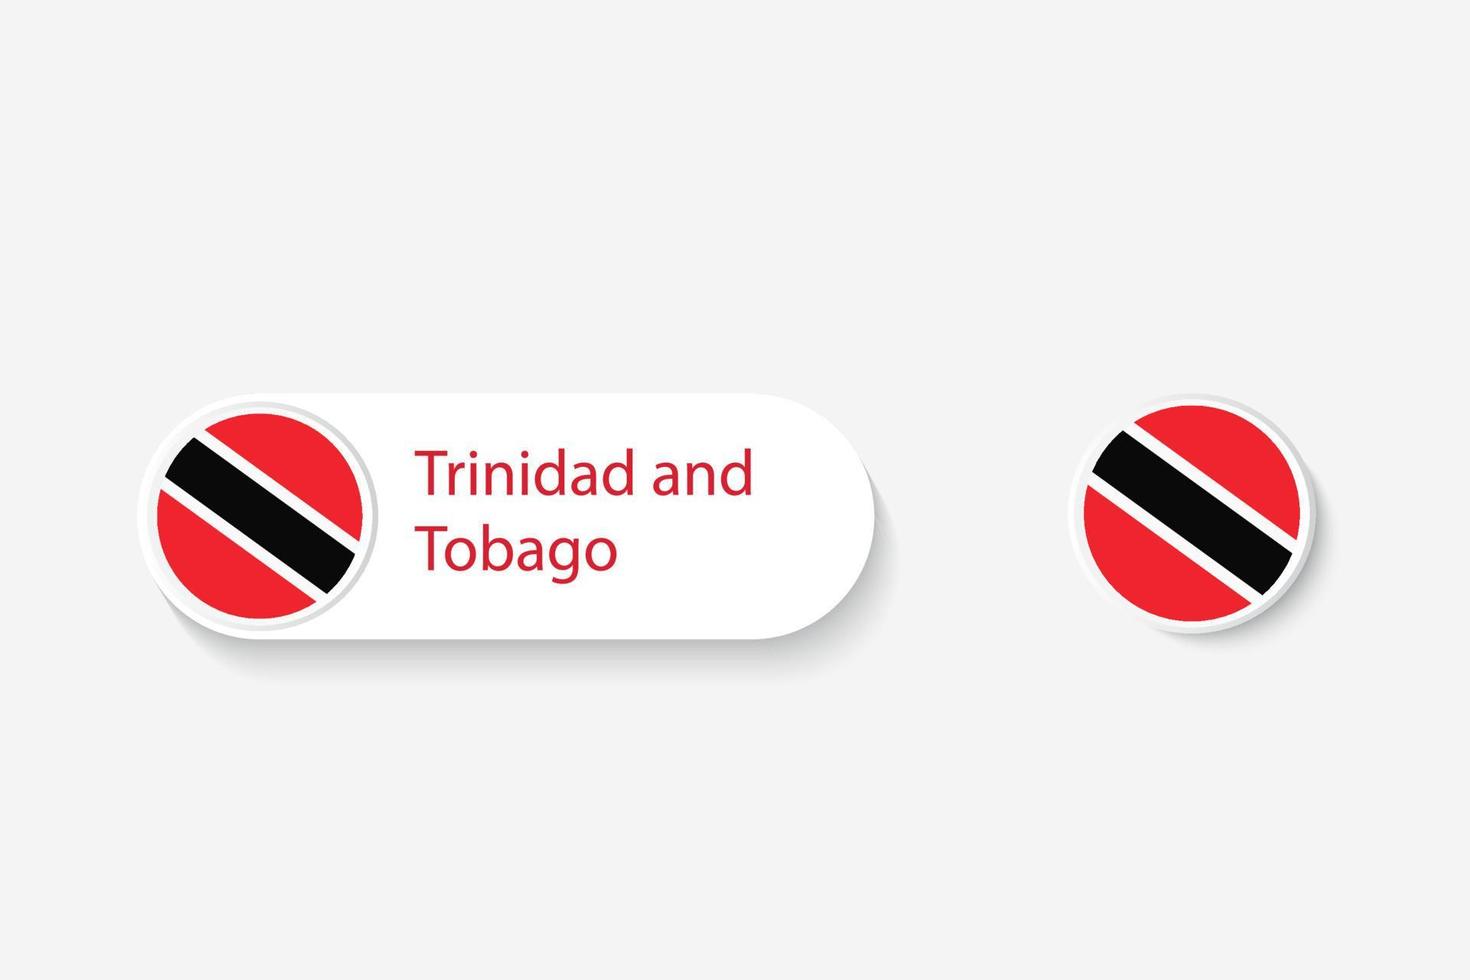 trinidad en tobago knop vlag in illustratie van ovaal gevormd met woord van trinidad en tobago. vector